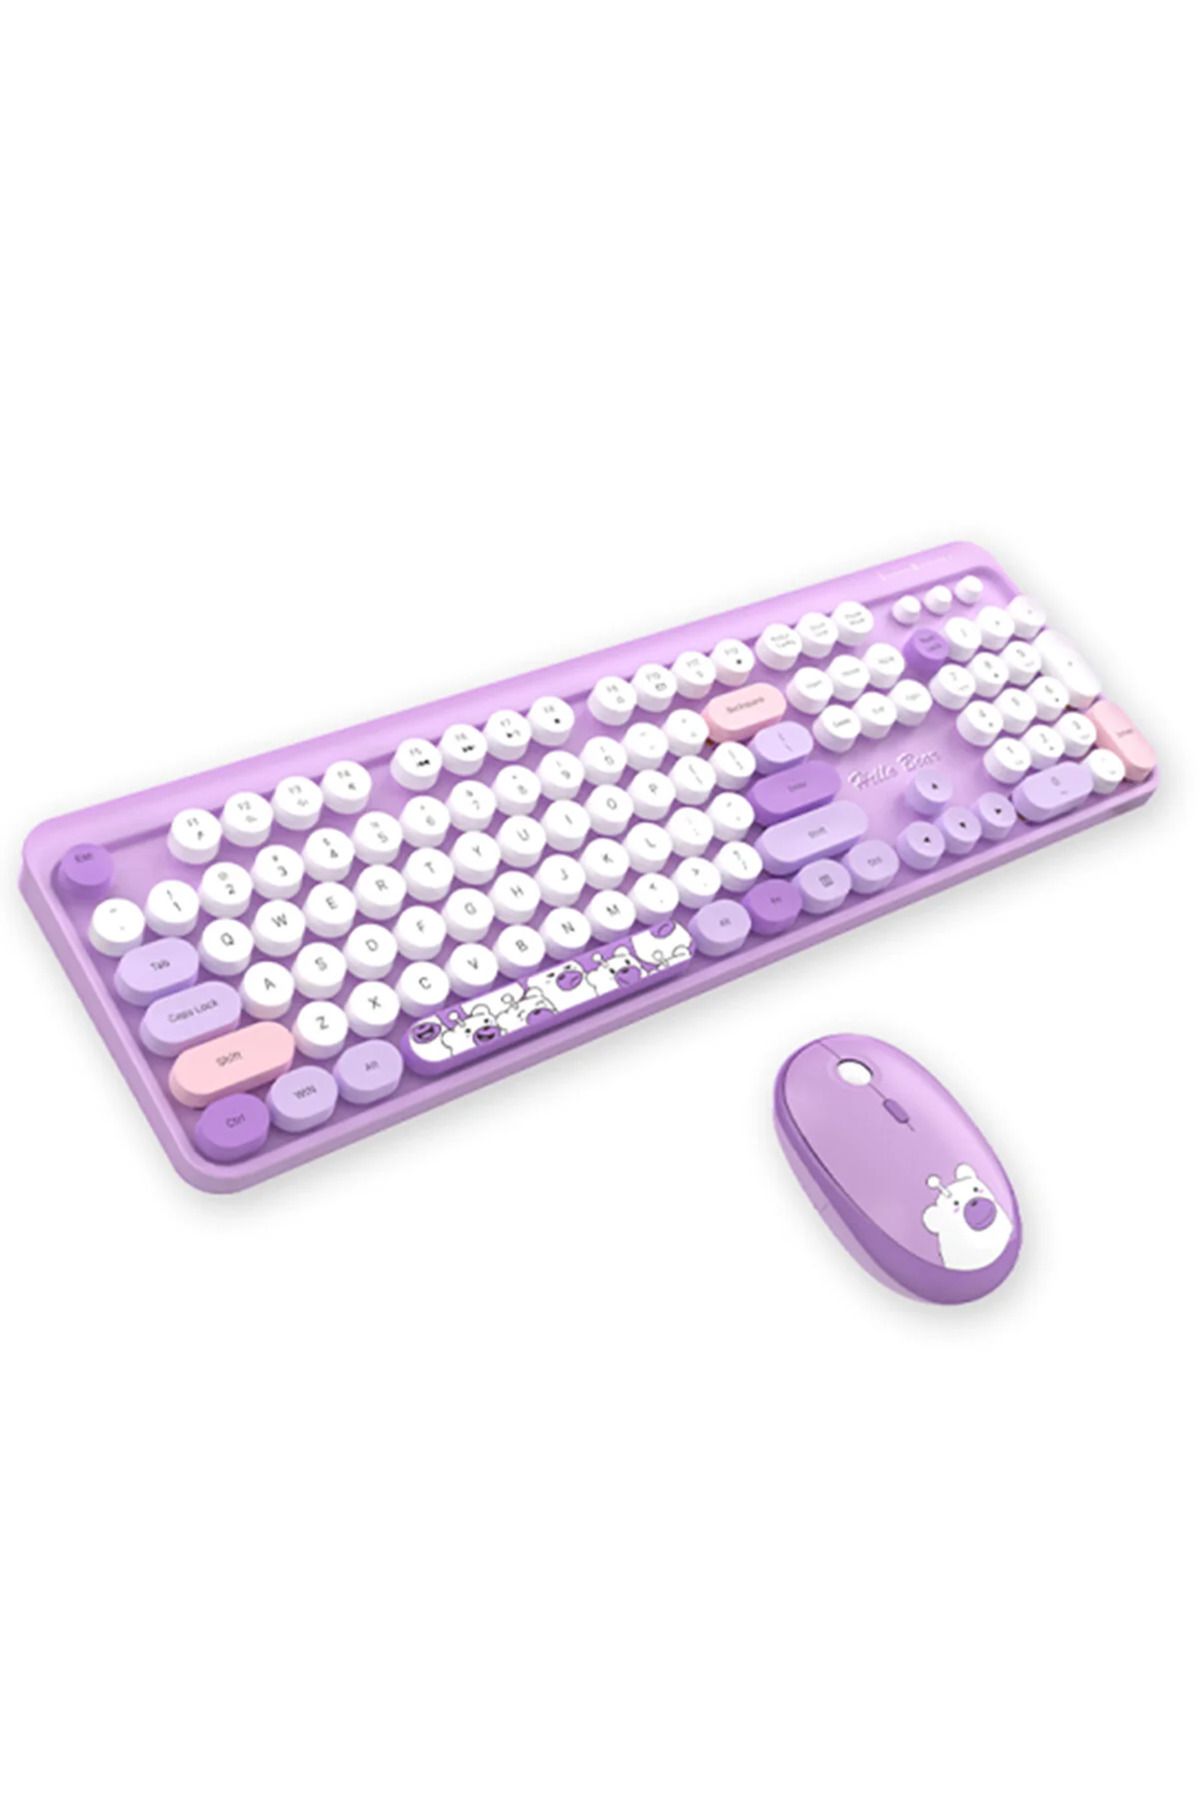 SNEXPRES Klavye Mouse  Ayıcık Desenli Kablosuz Renkli Yuvarlak Tuşlu Klavye Mouse Set